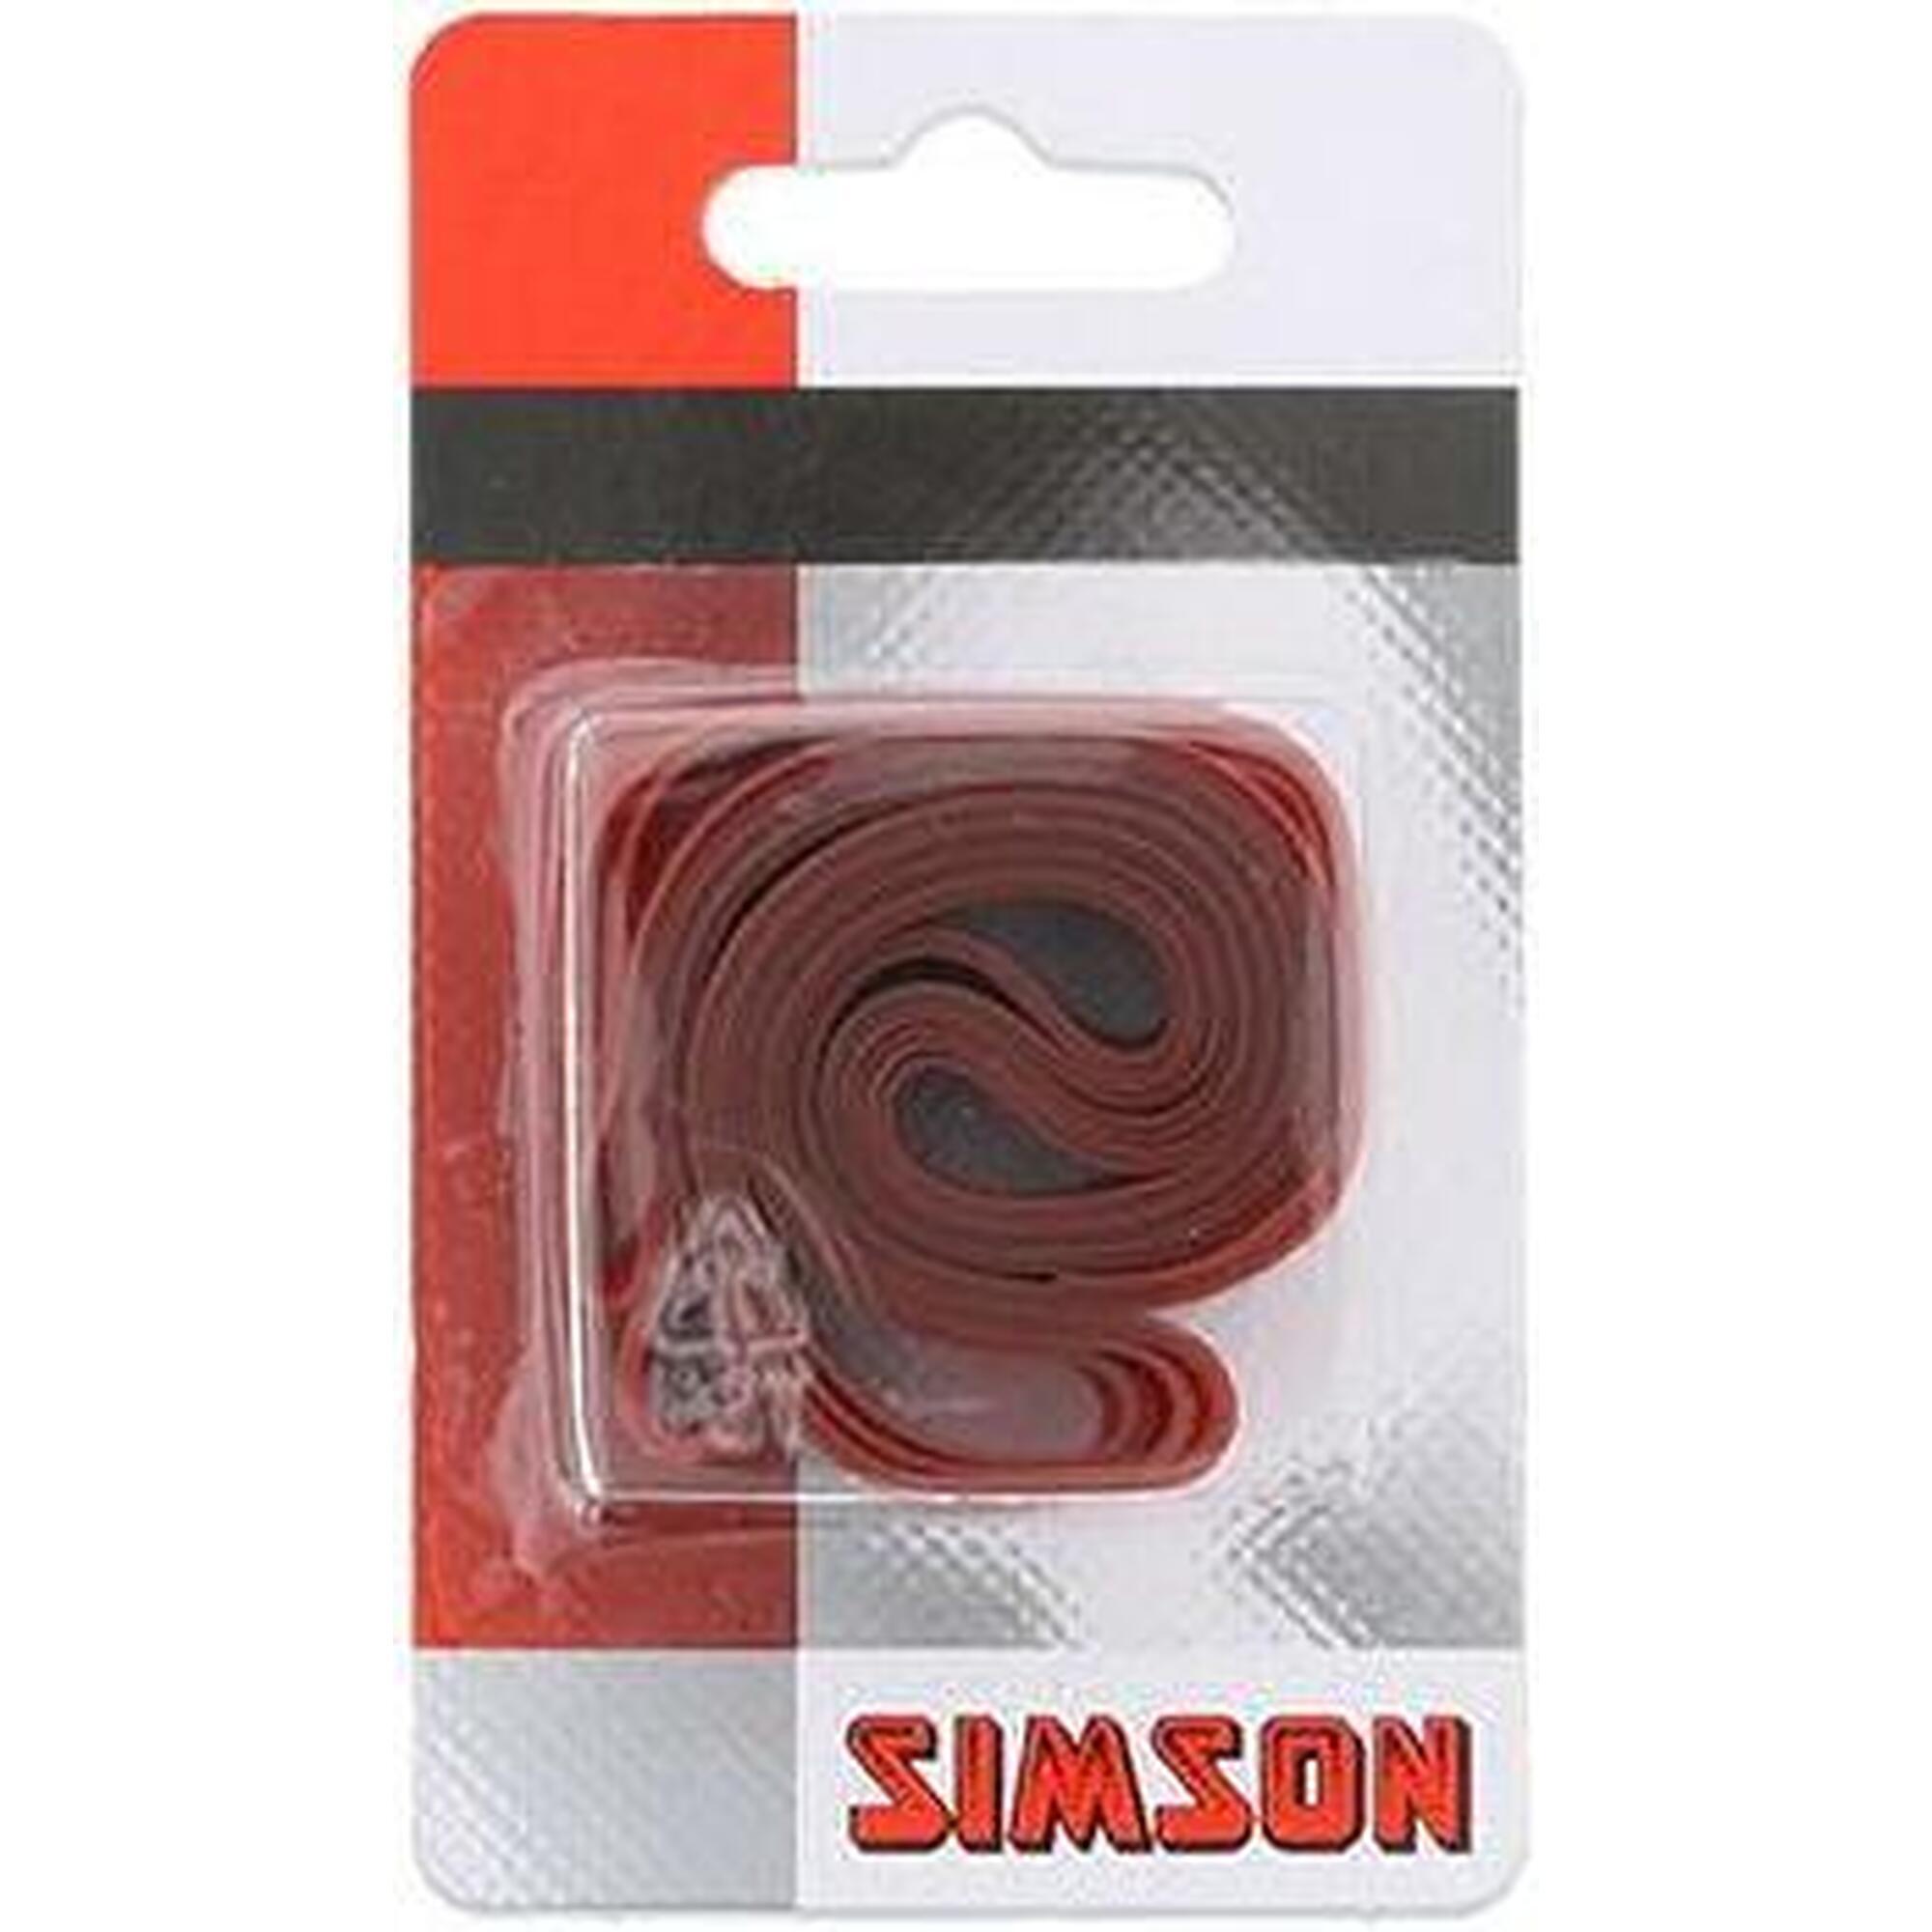 Vellint Simson 24/28 20 mm PVC